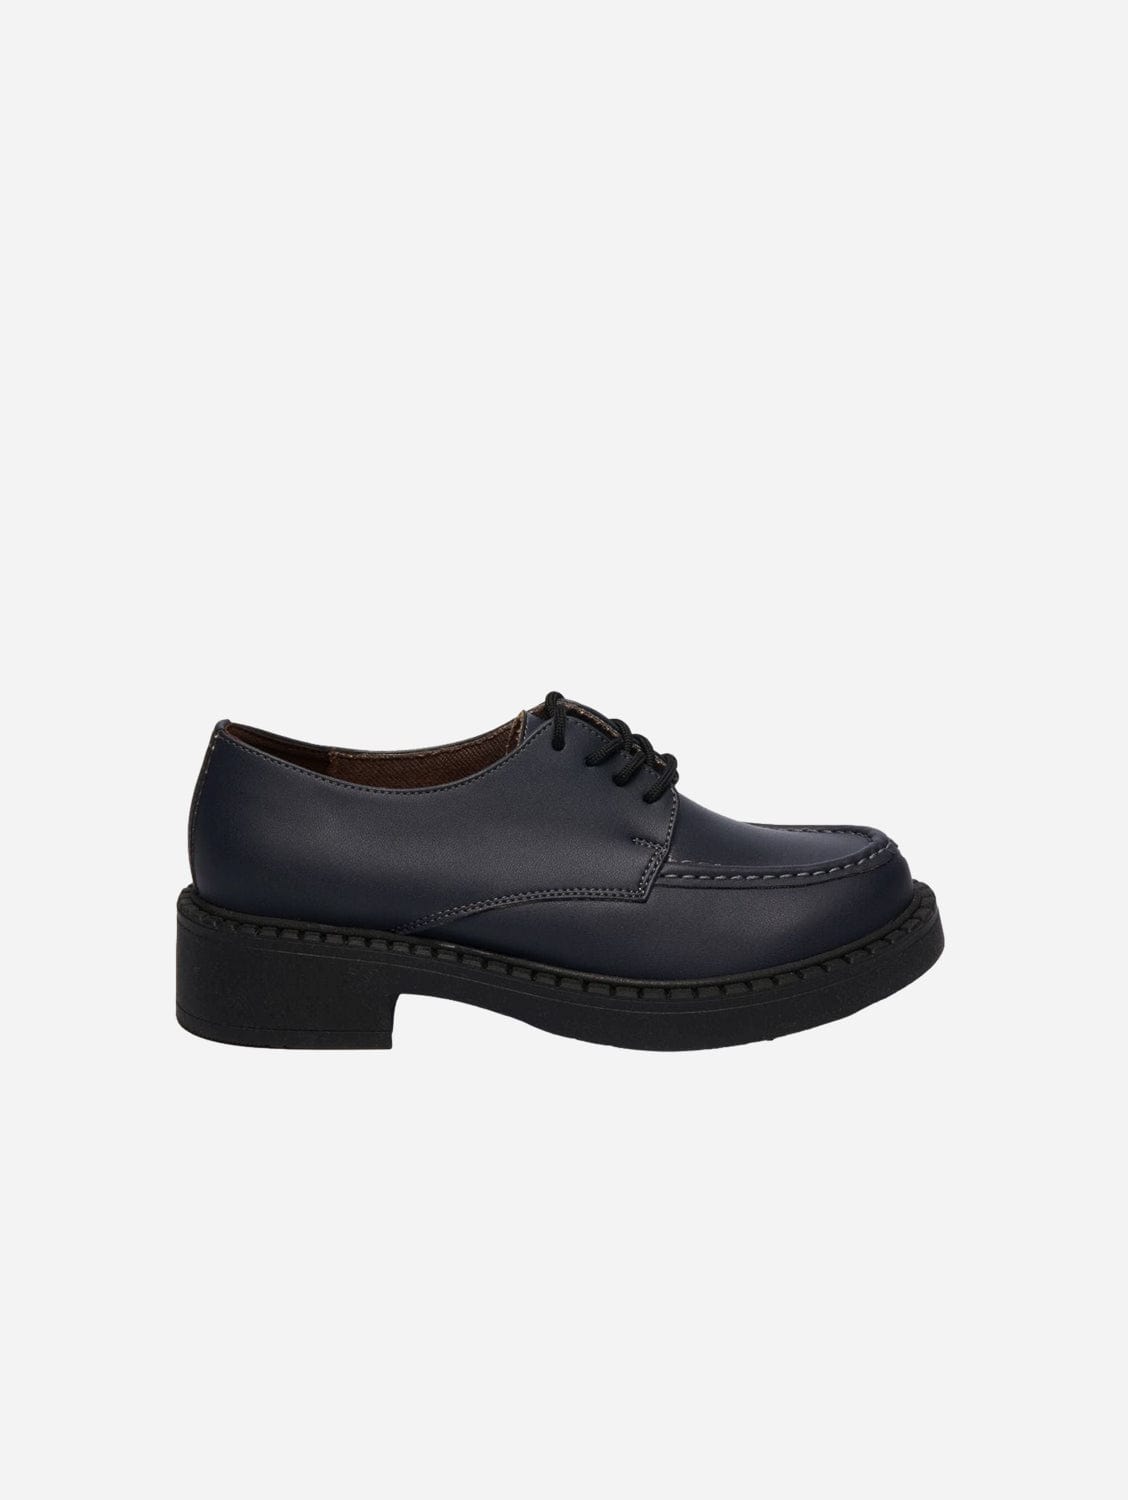 BLINDER New-LV-BUCKLE Canvas Shoes For Men - Buy Navy Color